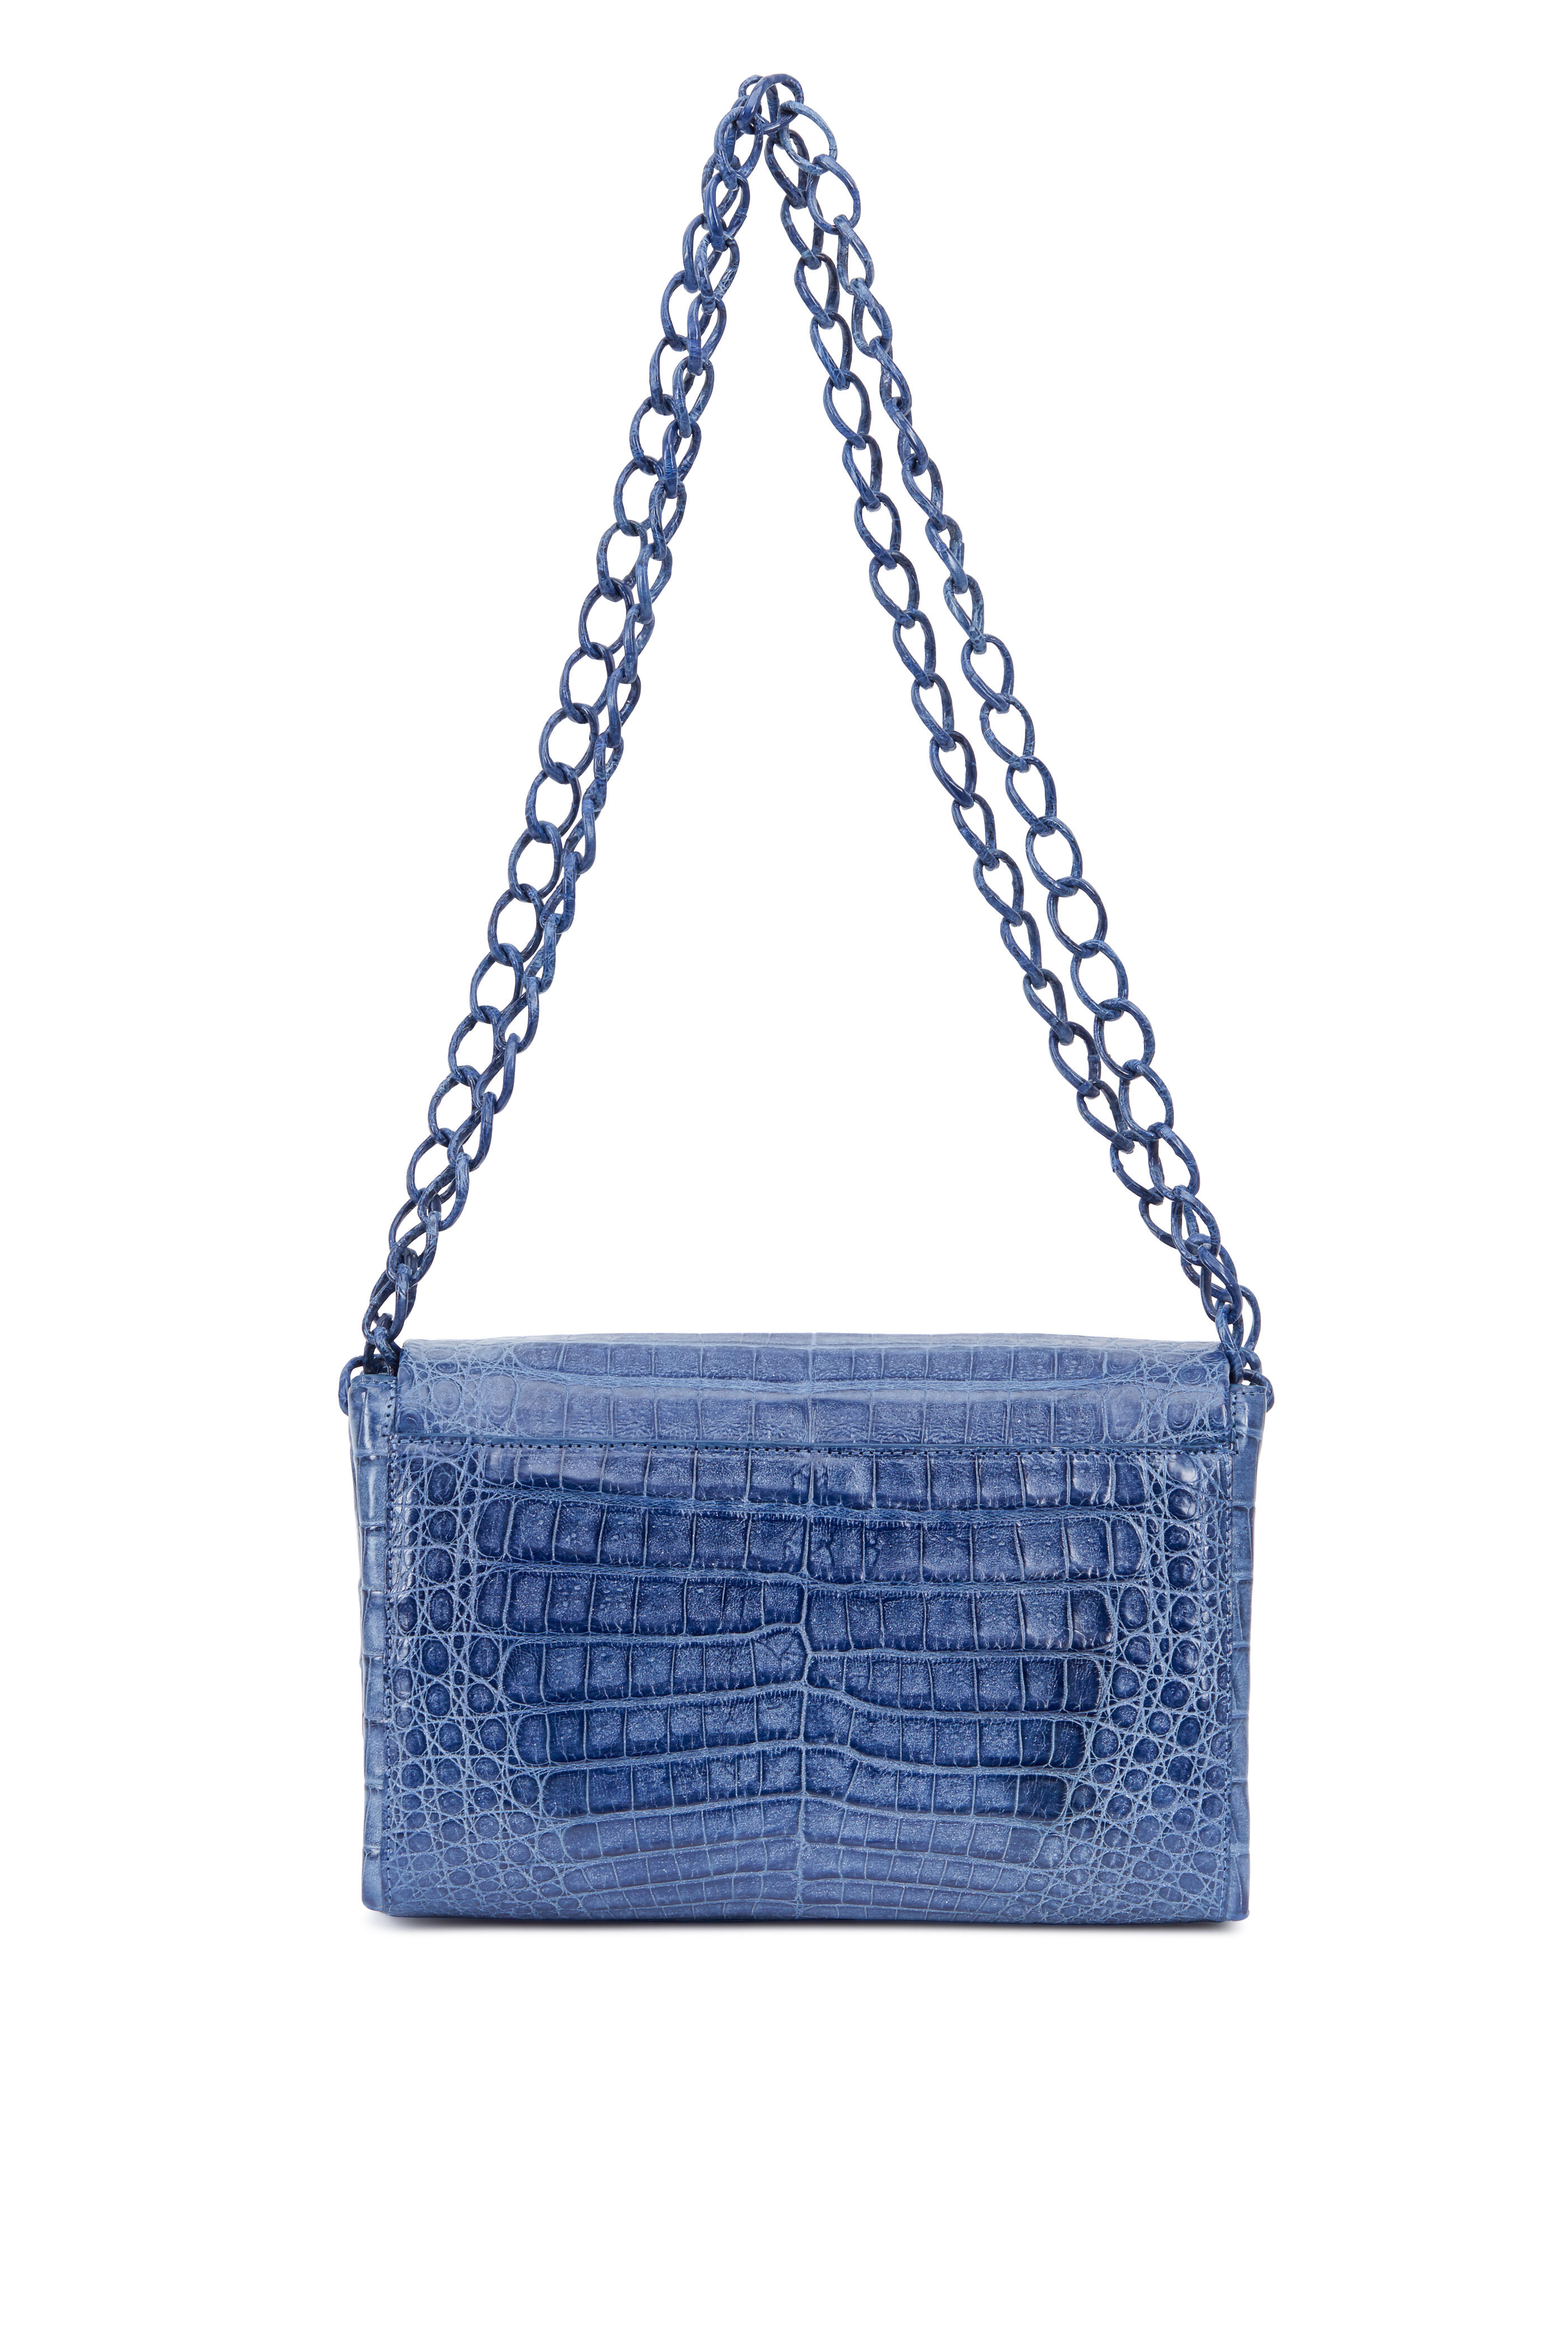 Nancy Gonzalez - Navy Blue Crocodile Chain Convertible Bag